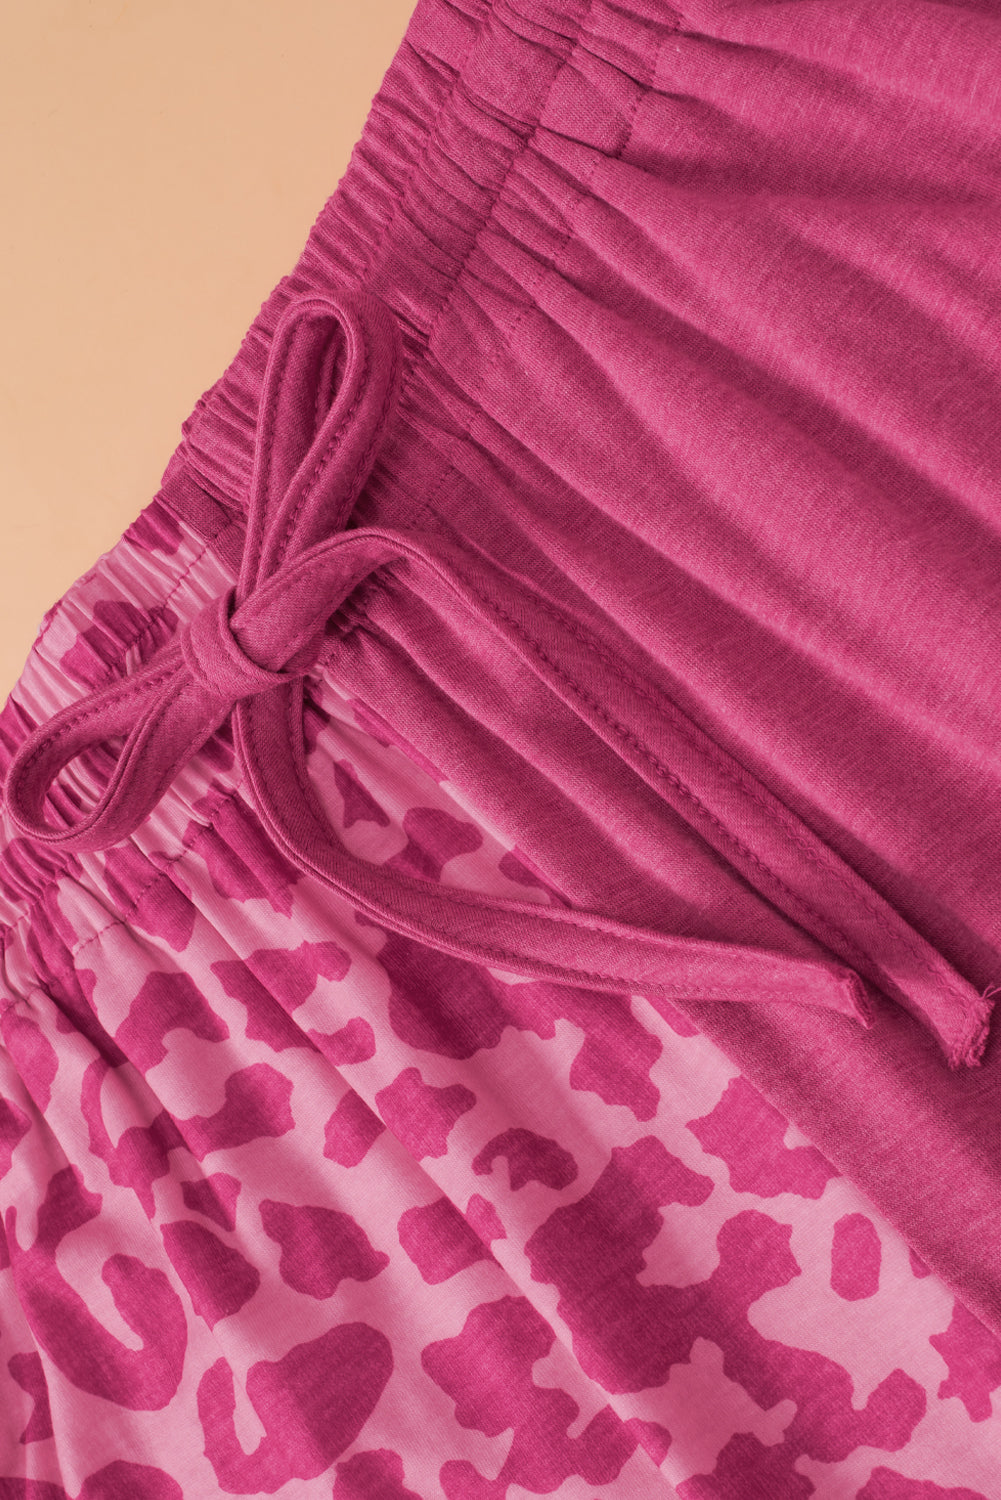 Set pigiama lungo con tasche a contrasto rosa leopardo